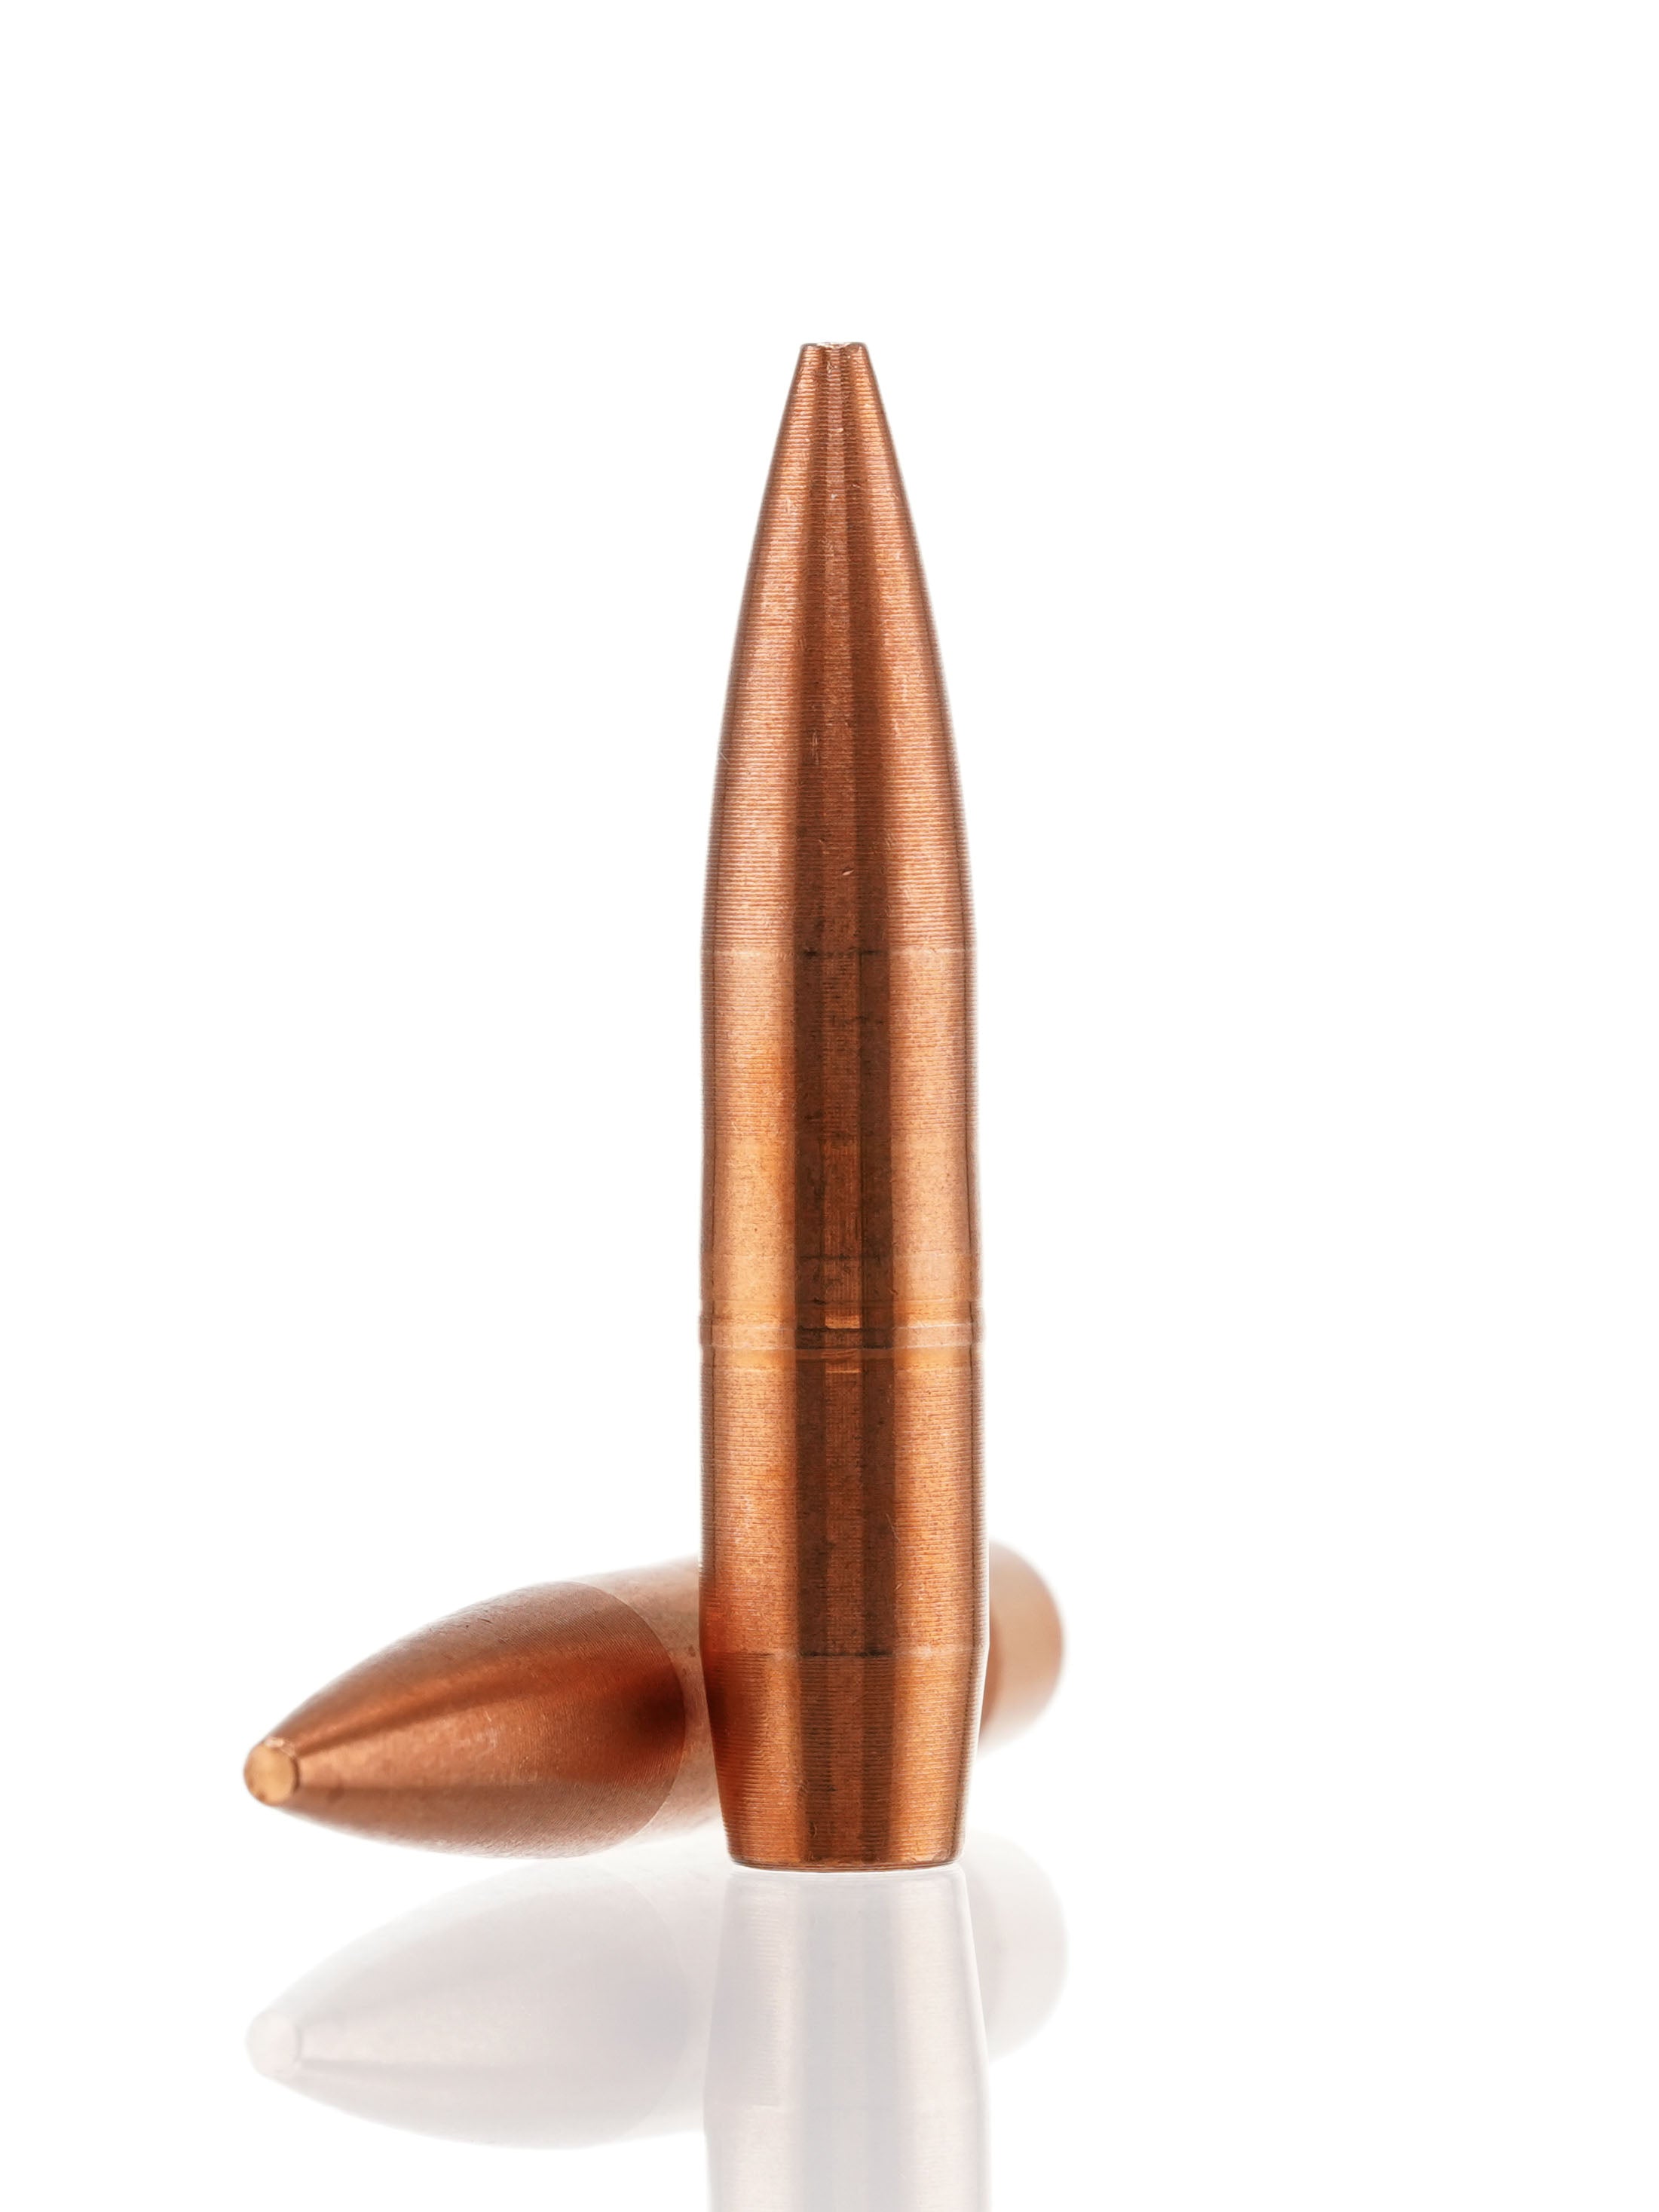 Solid copper match bullet